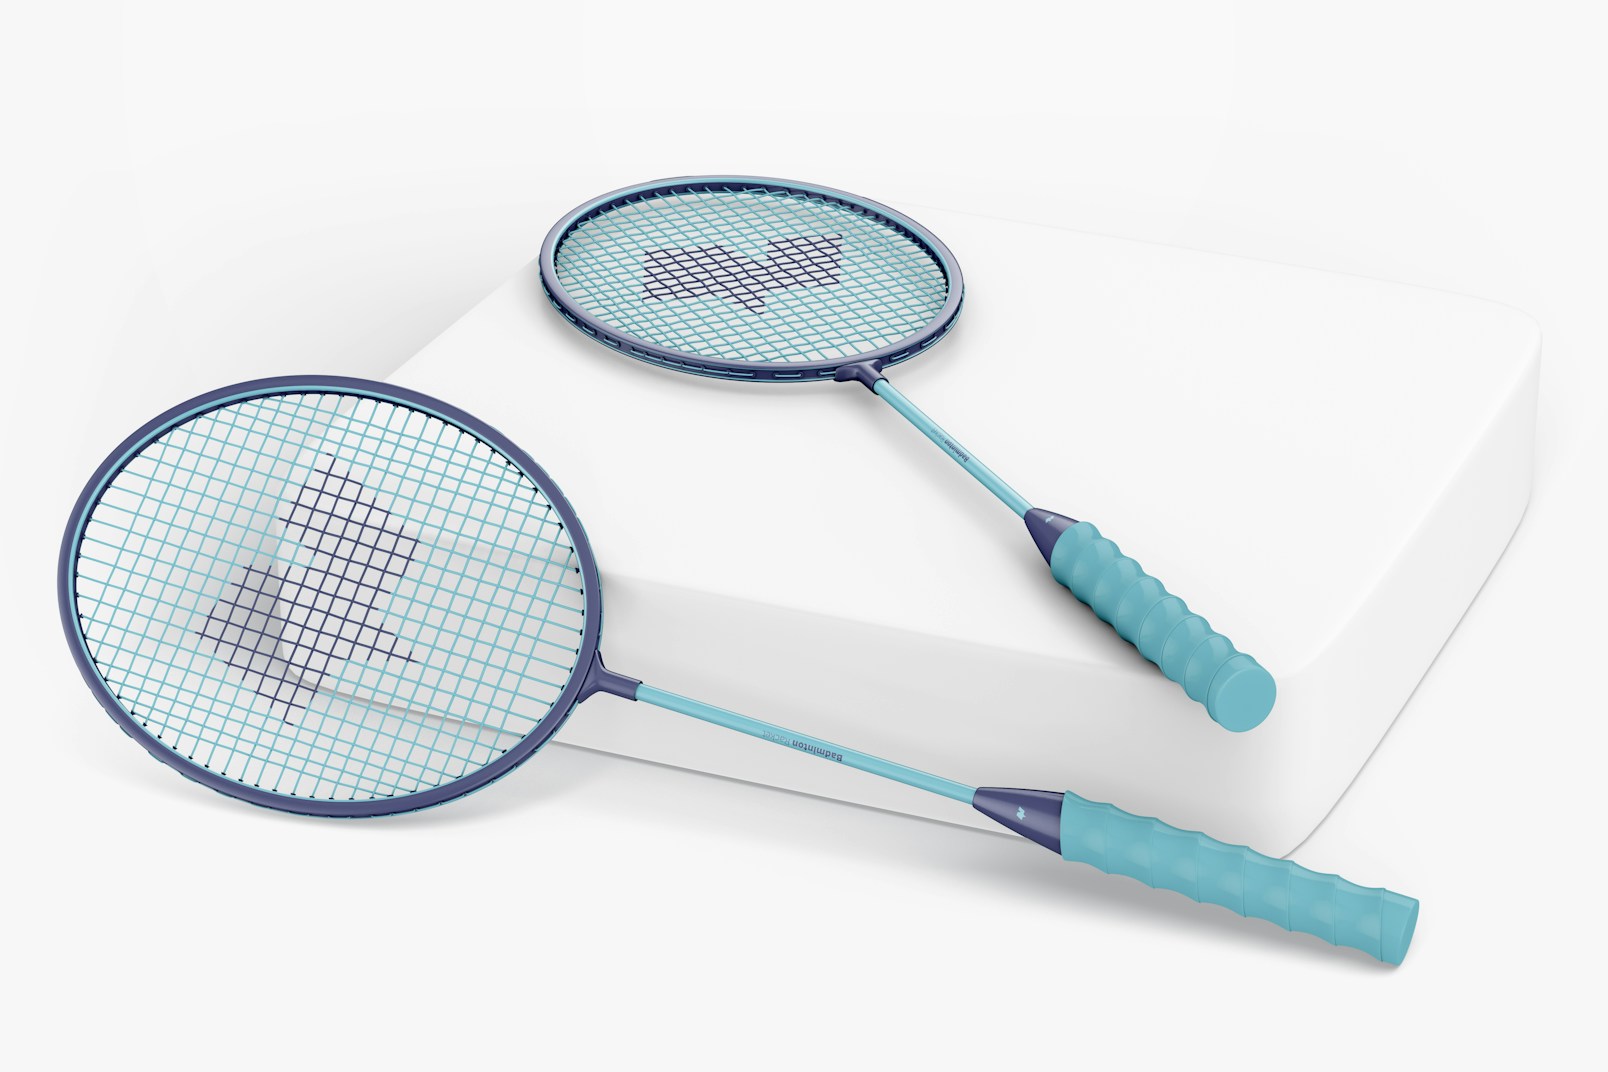 Badminton Rackets Mockup